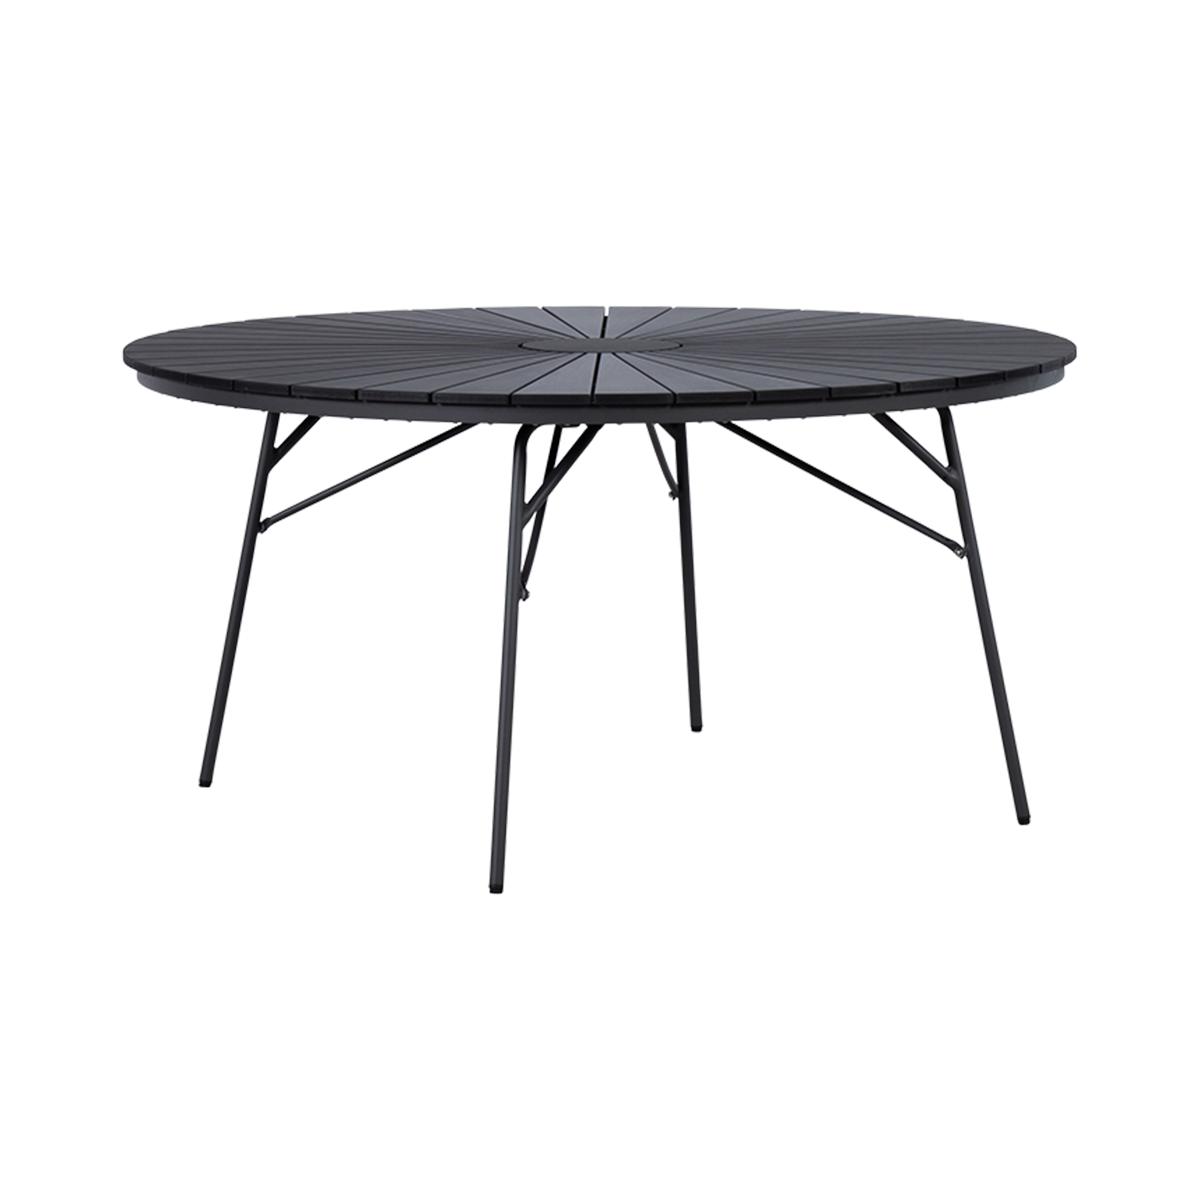 Cinas - Hard & Ellen Garden Table Ø 150 cm - Polywood - Anthracite/Black (2517020)